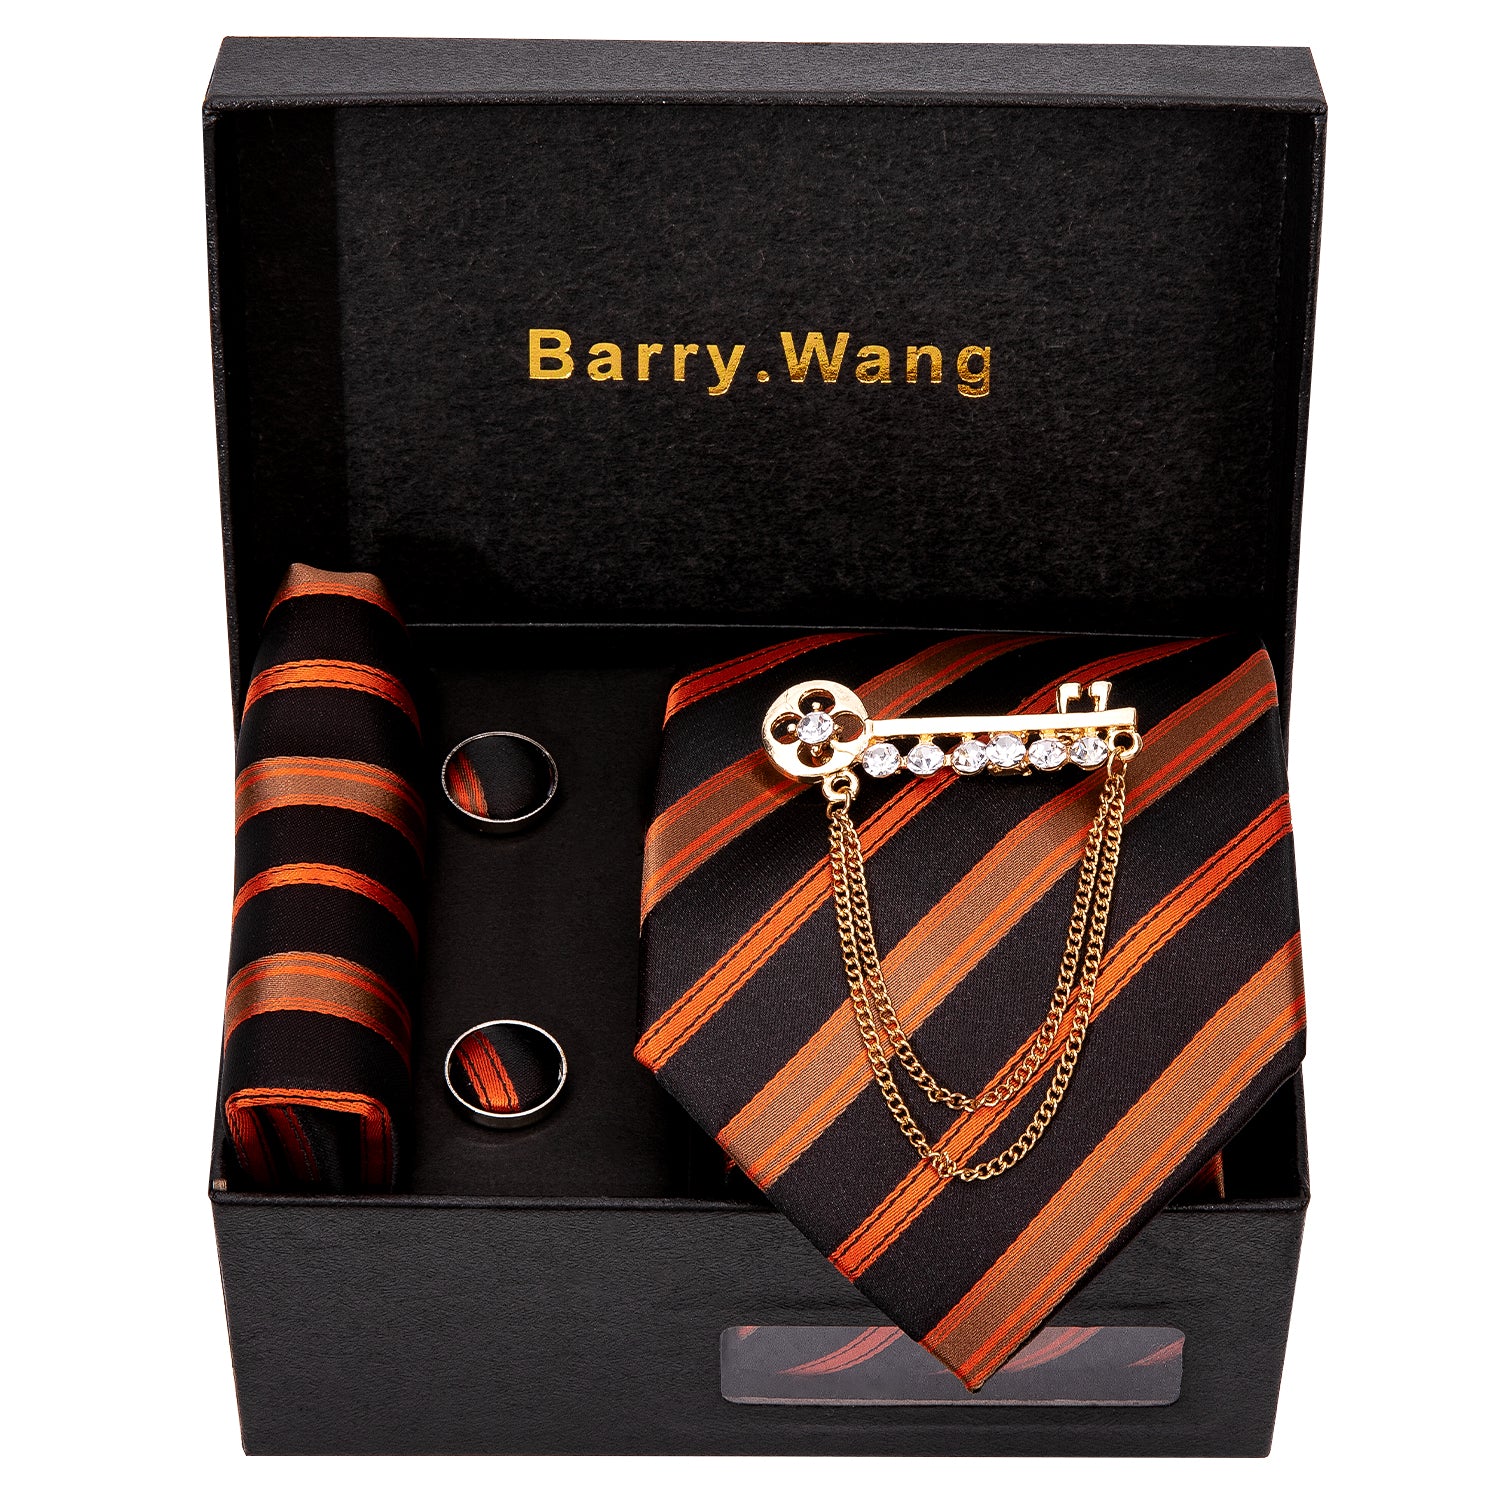 Orange Black Striped Necktie Alloy Lapel Pin Brooch Pocket Square Cufflinks Gift Box Set